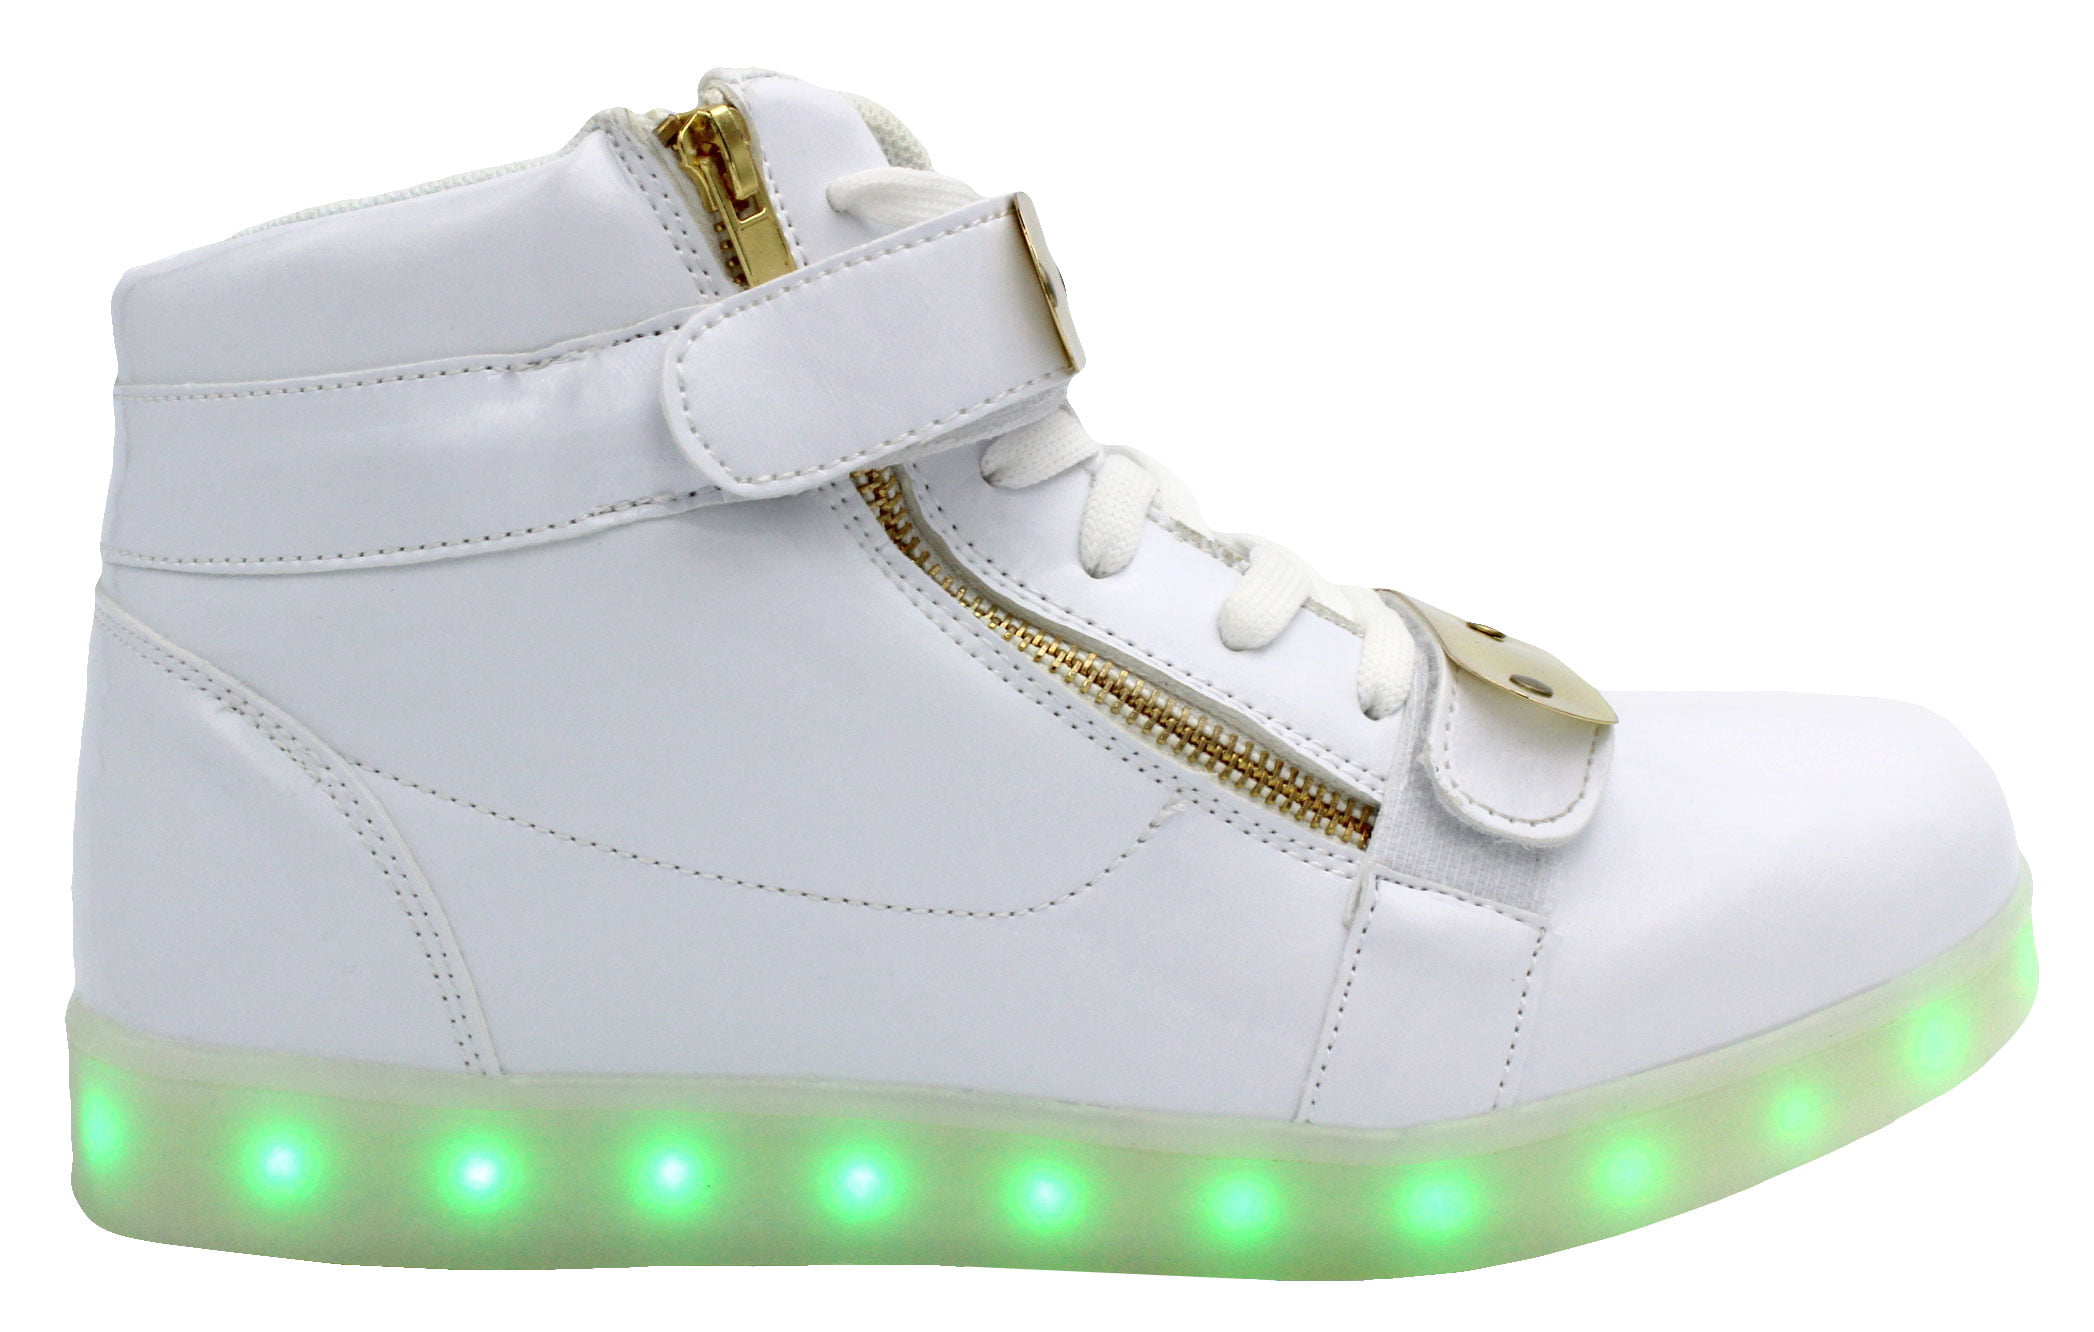 white led light up shoes